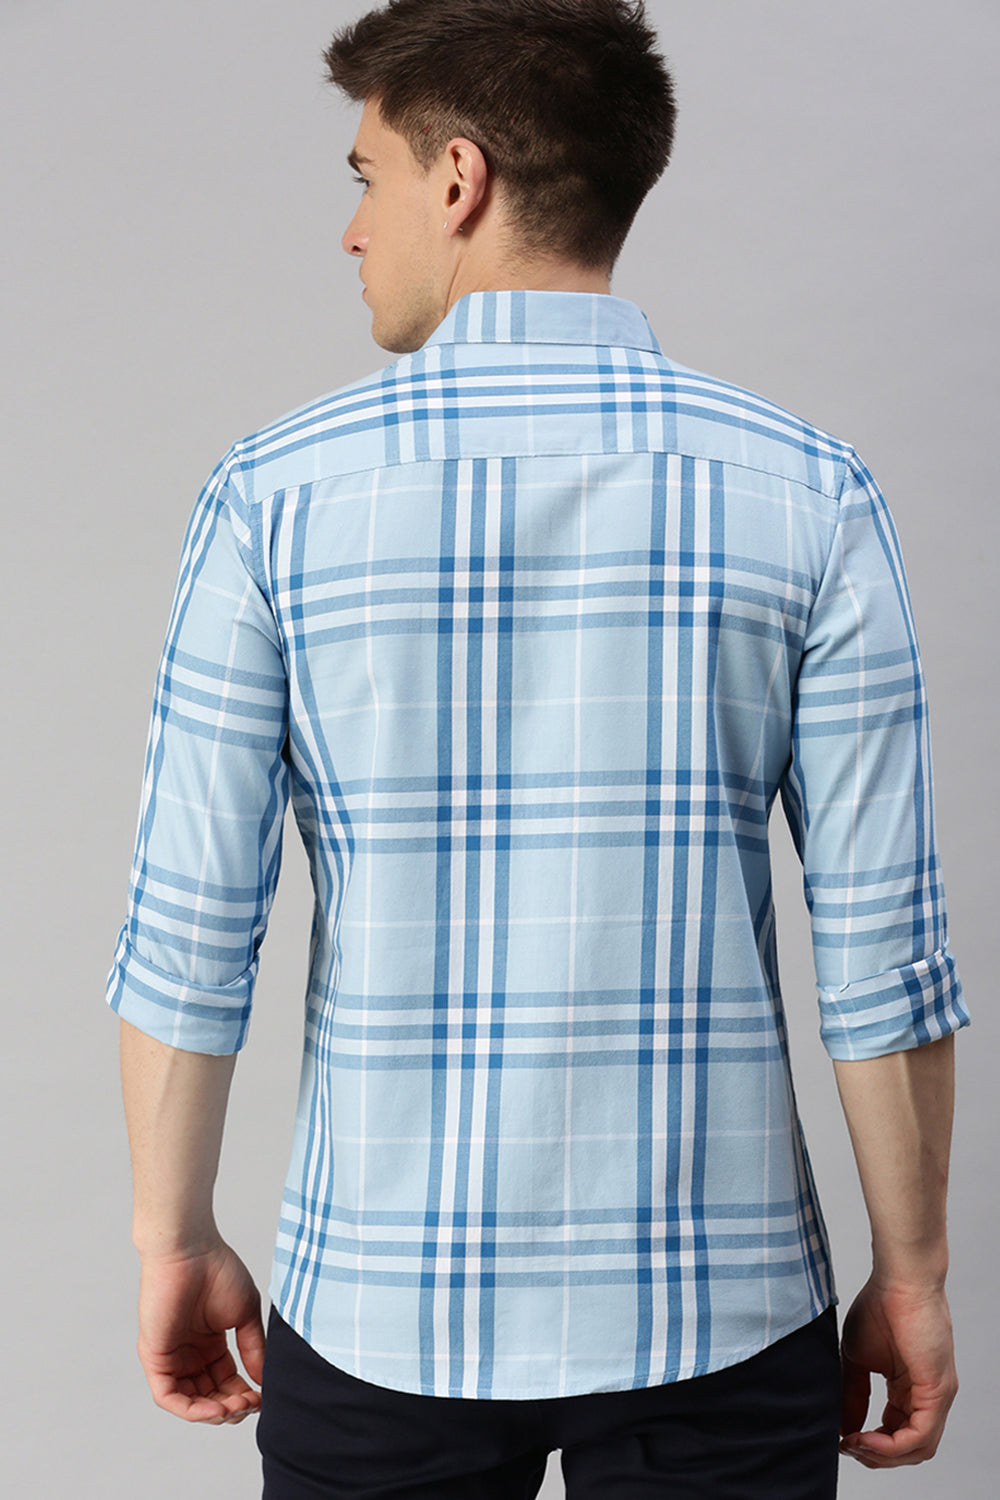 CP BRO Men's Cotton Full Sleeve Checked Slim Fit Collar Neck Light Blue Color Woven Shirt | Sbo1-28 B